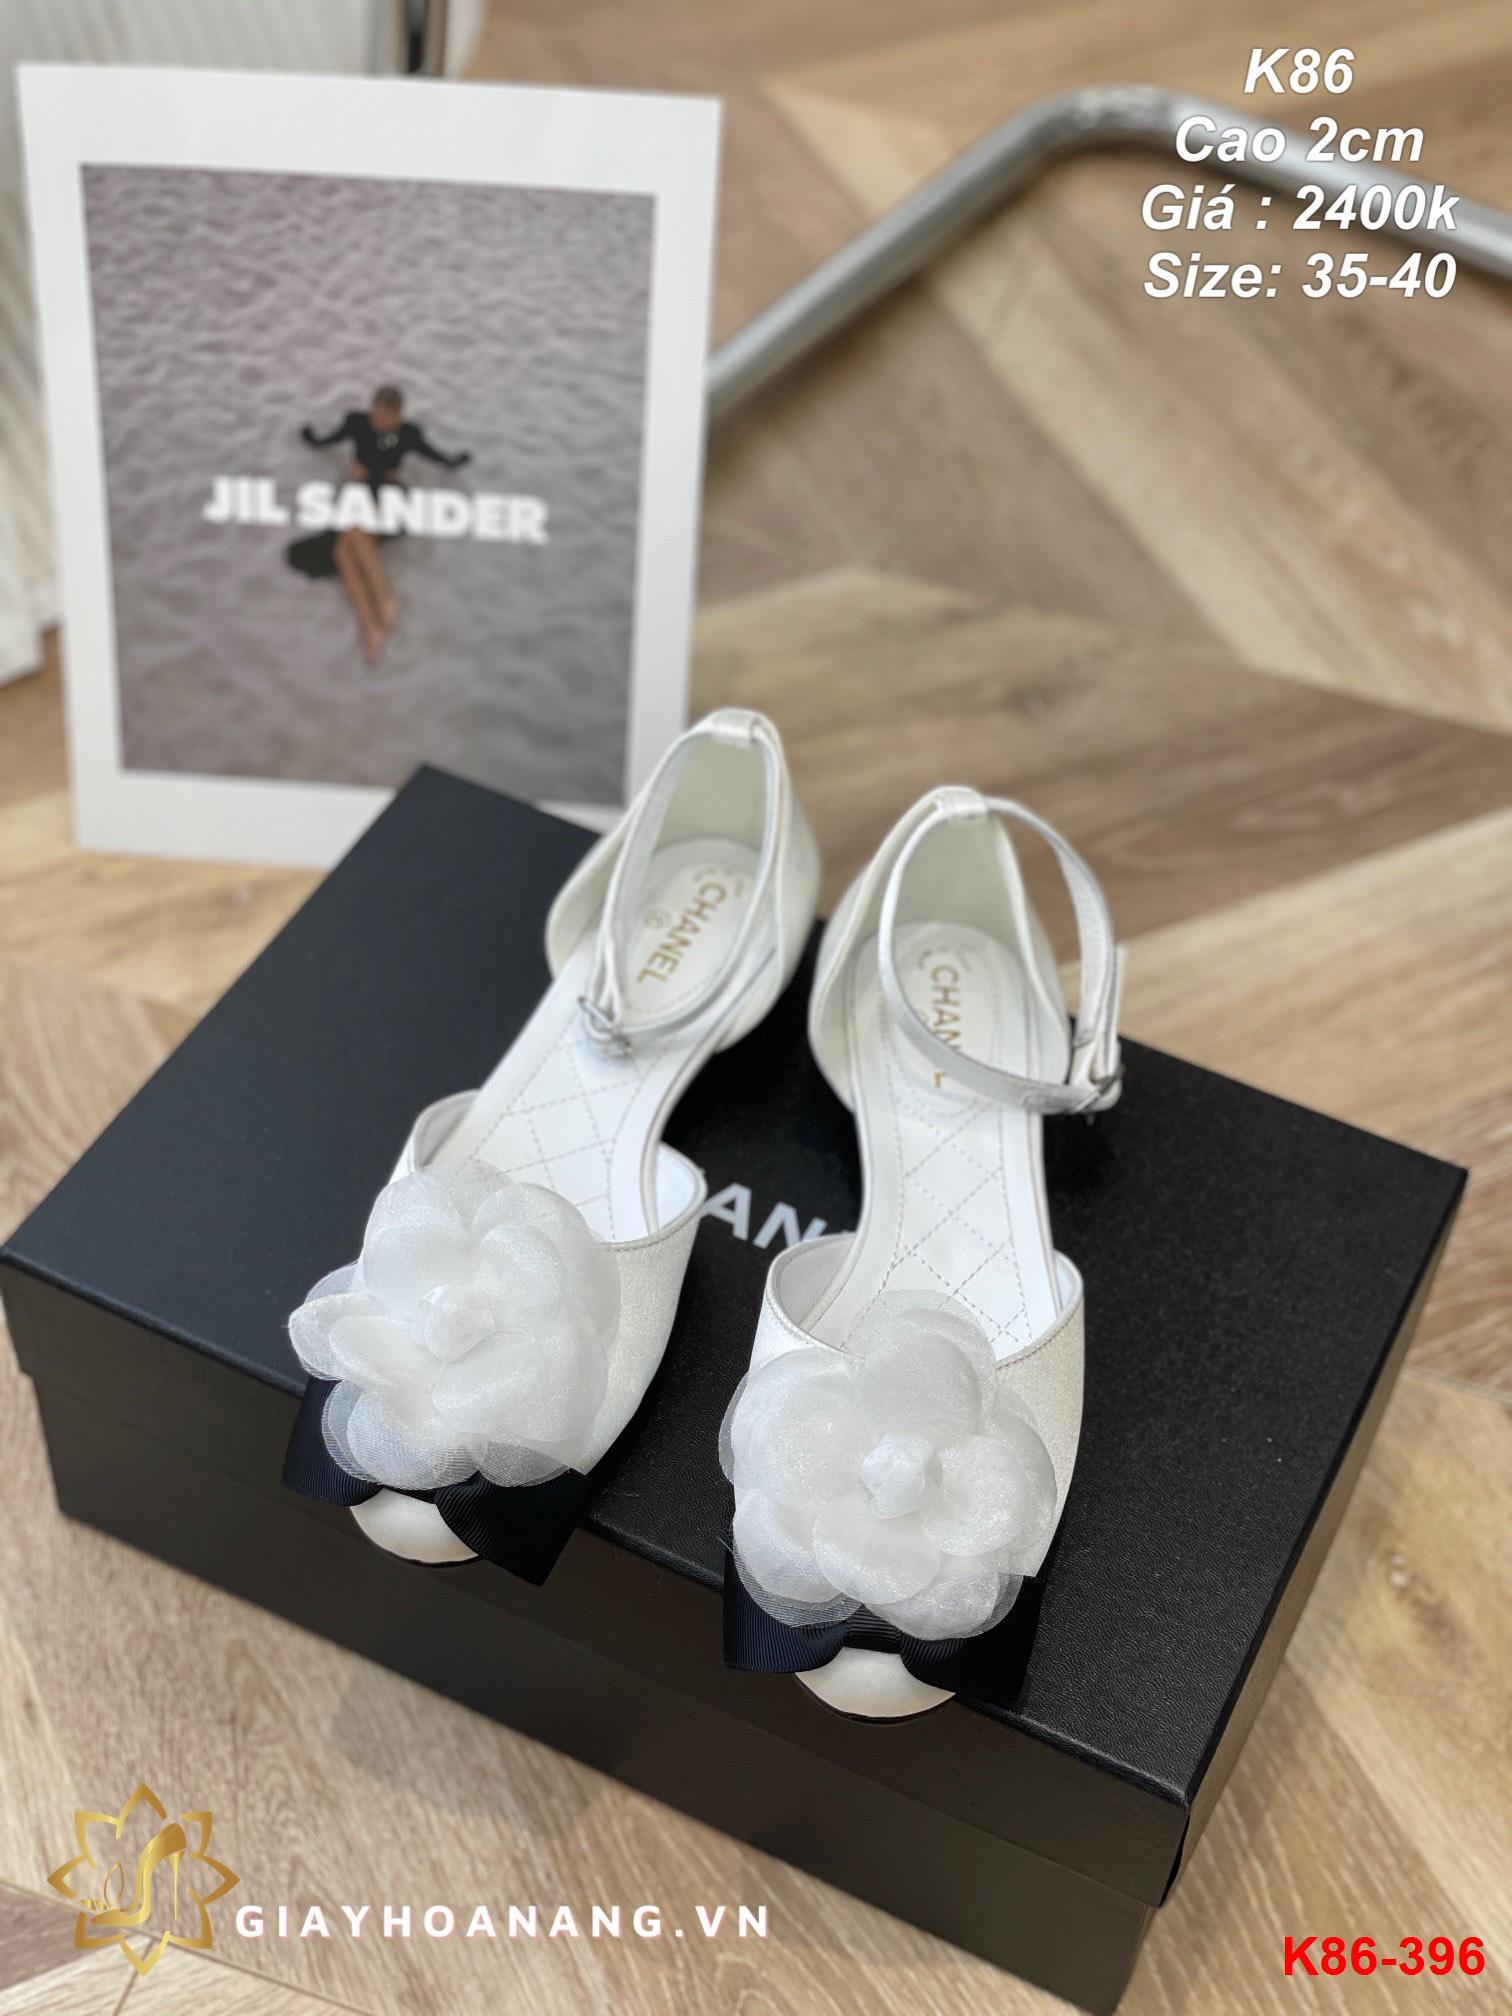 K86-396 Chanel sandal cao 2cm siêu cấp